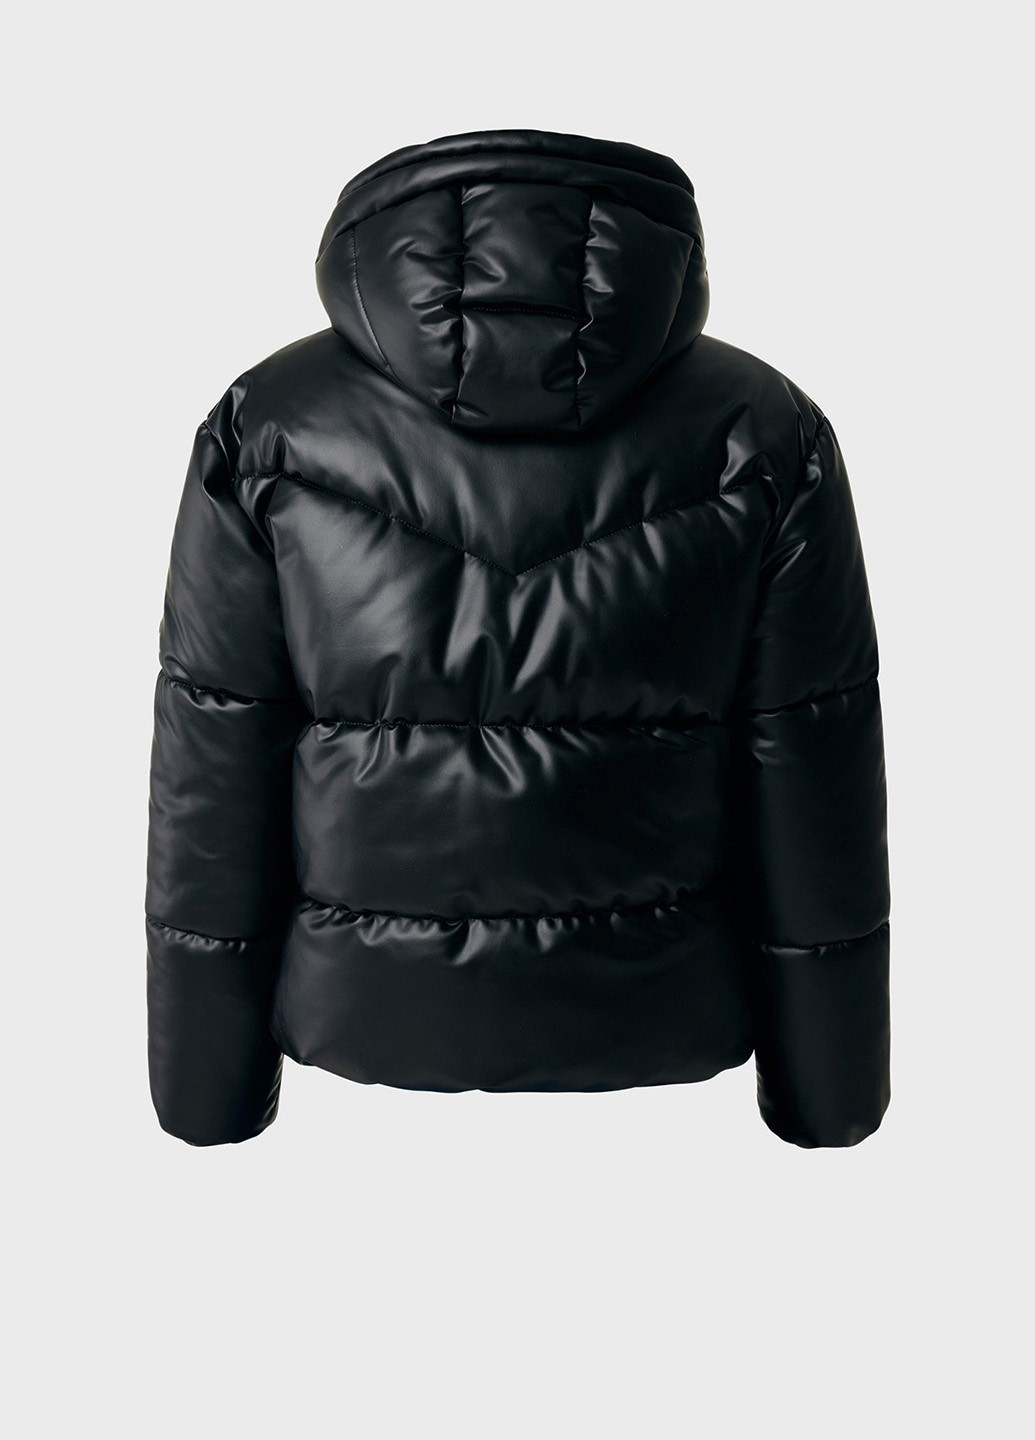 Чорна зимня куртка Mexx